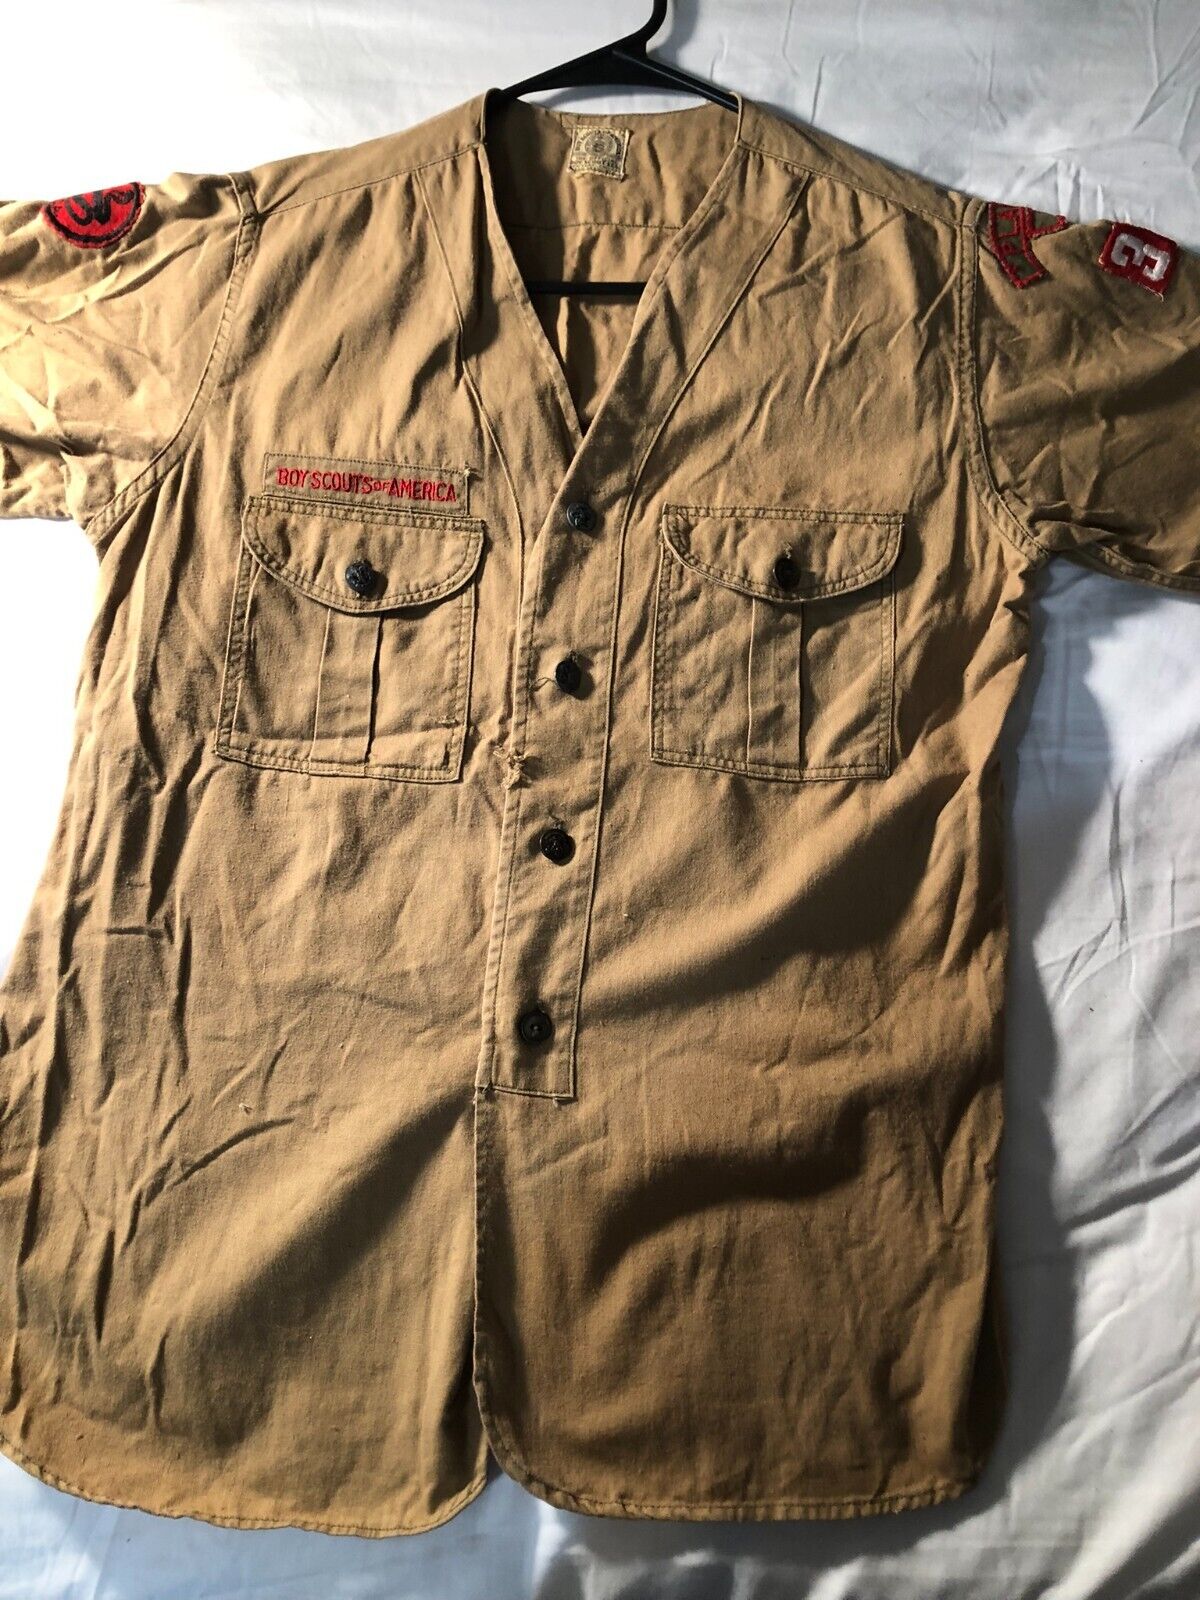 Vintage BSA Boy Scout uniform 1940s or 50's short sleeve patches metal buttons